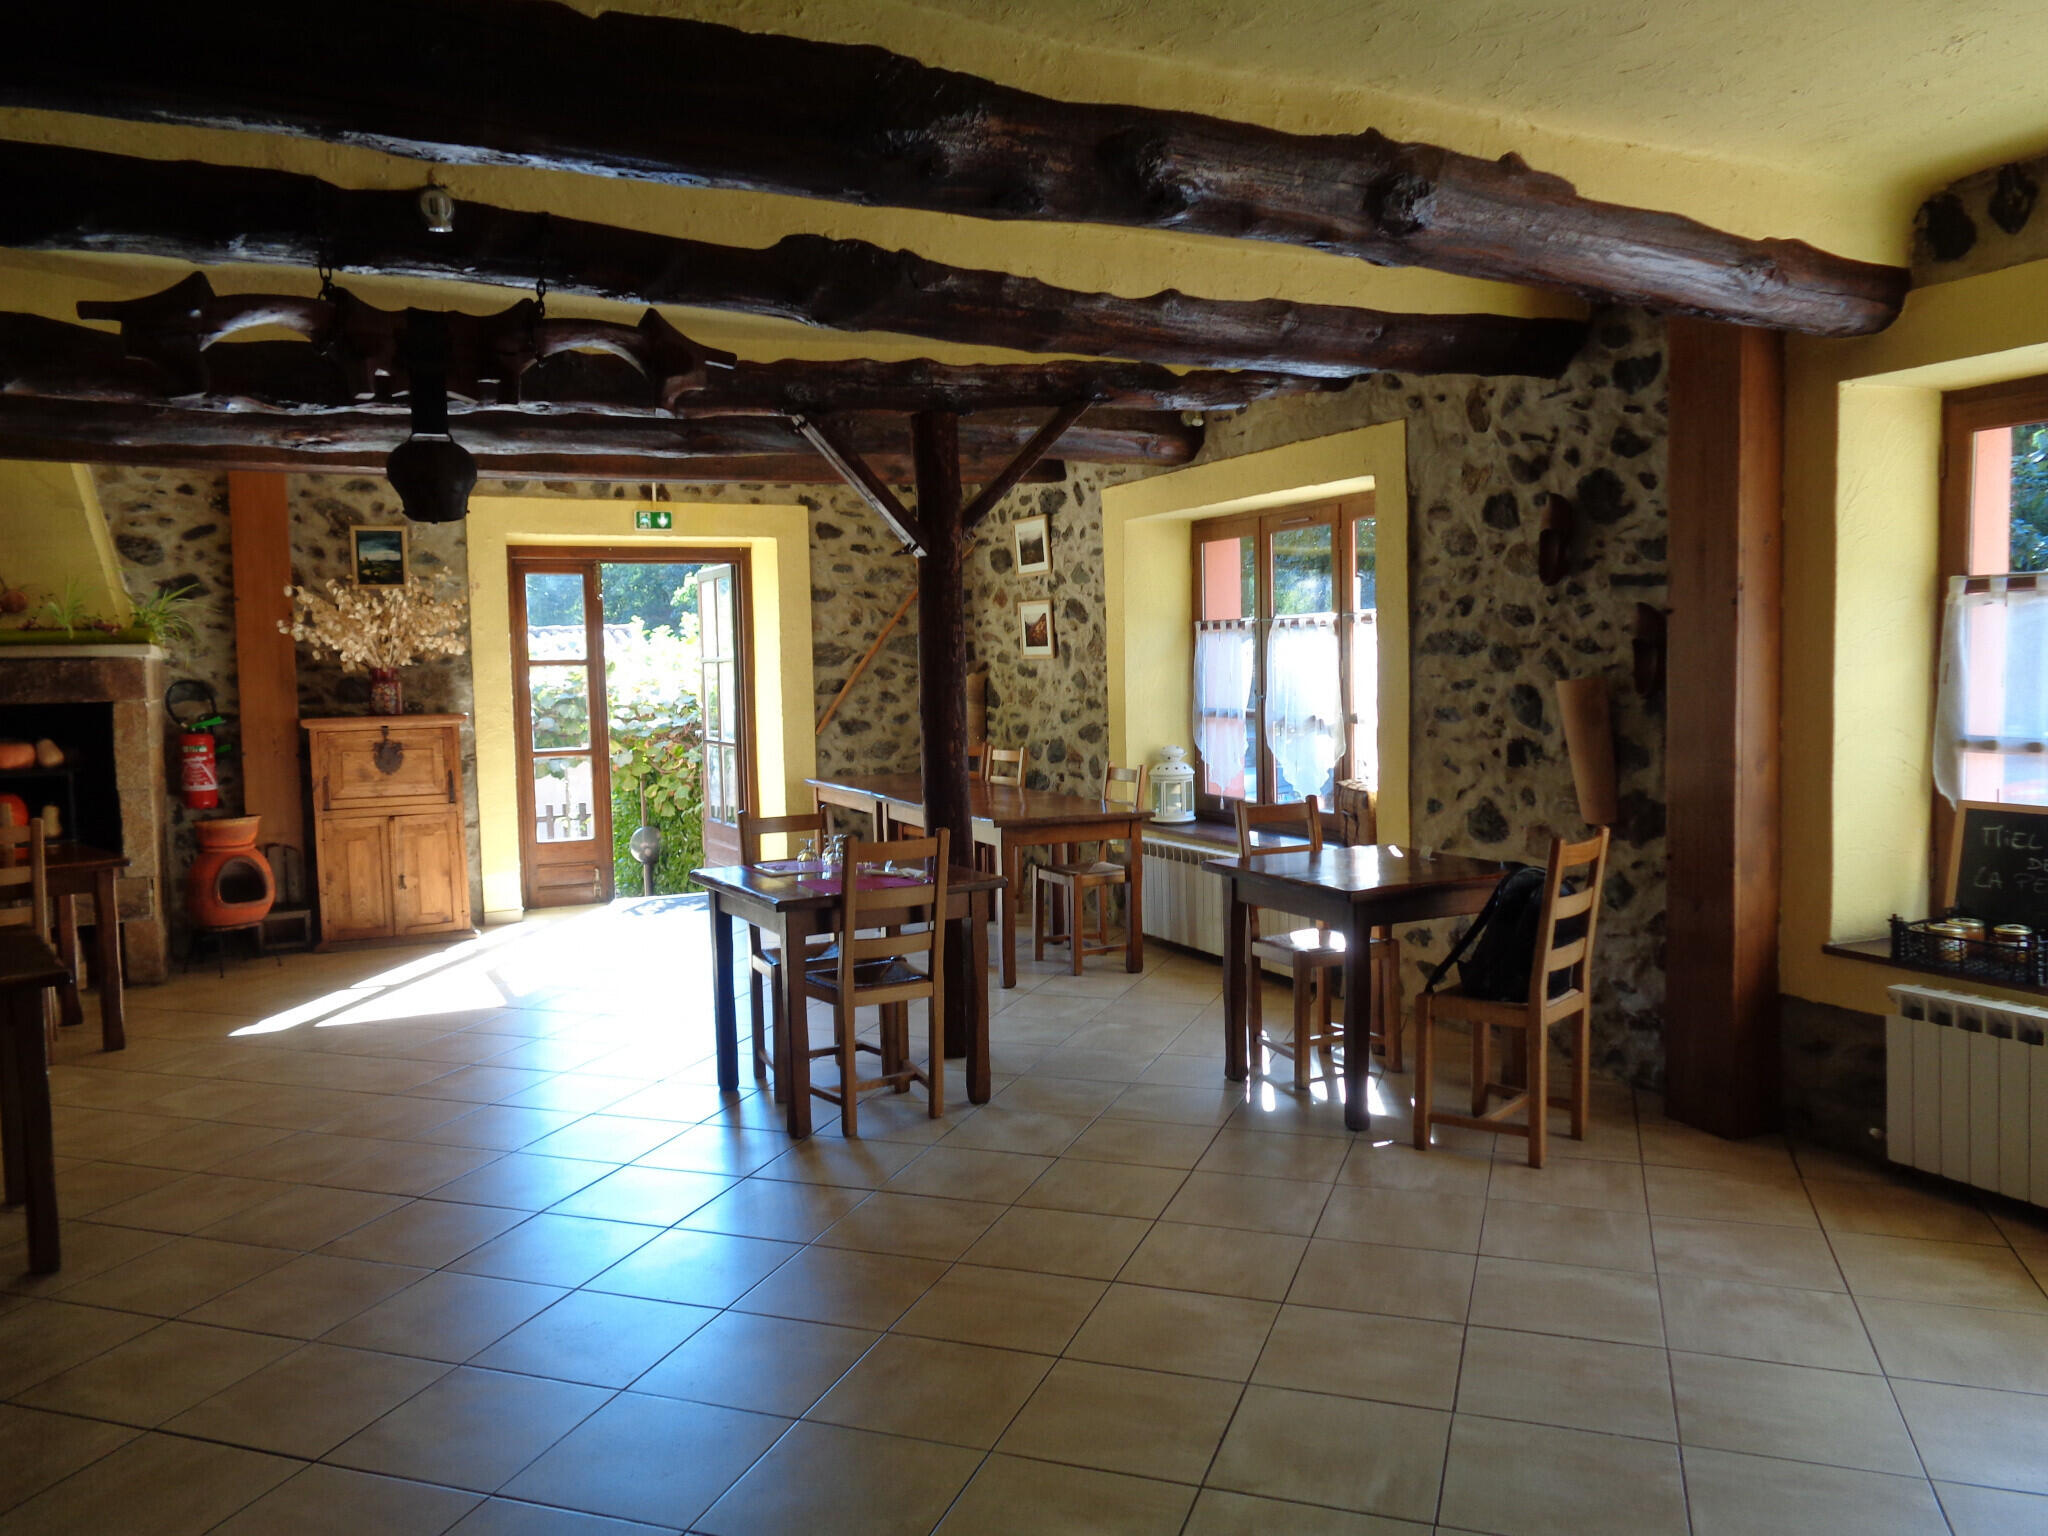 Vente restaurant avec 6 chambres Val d'Aigoual 30 